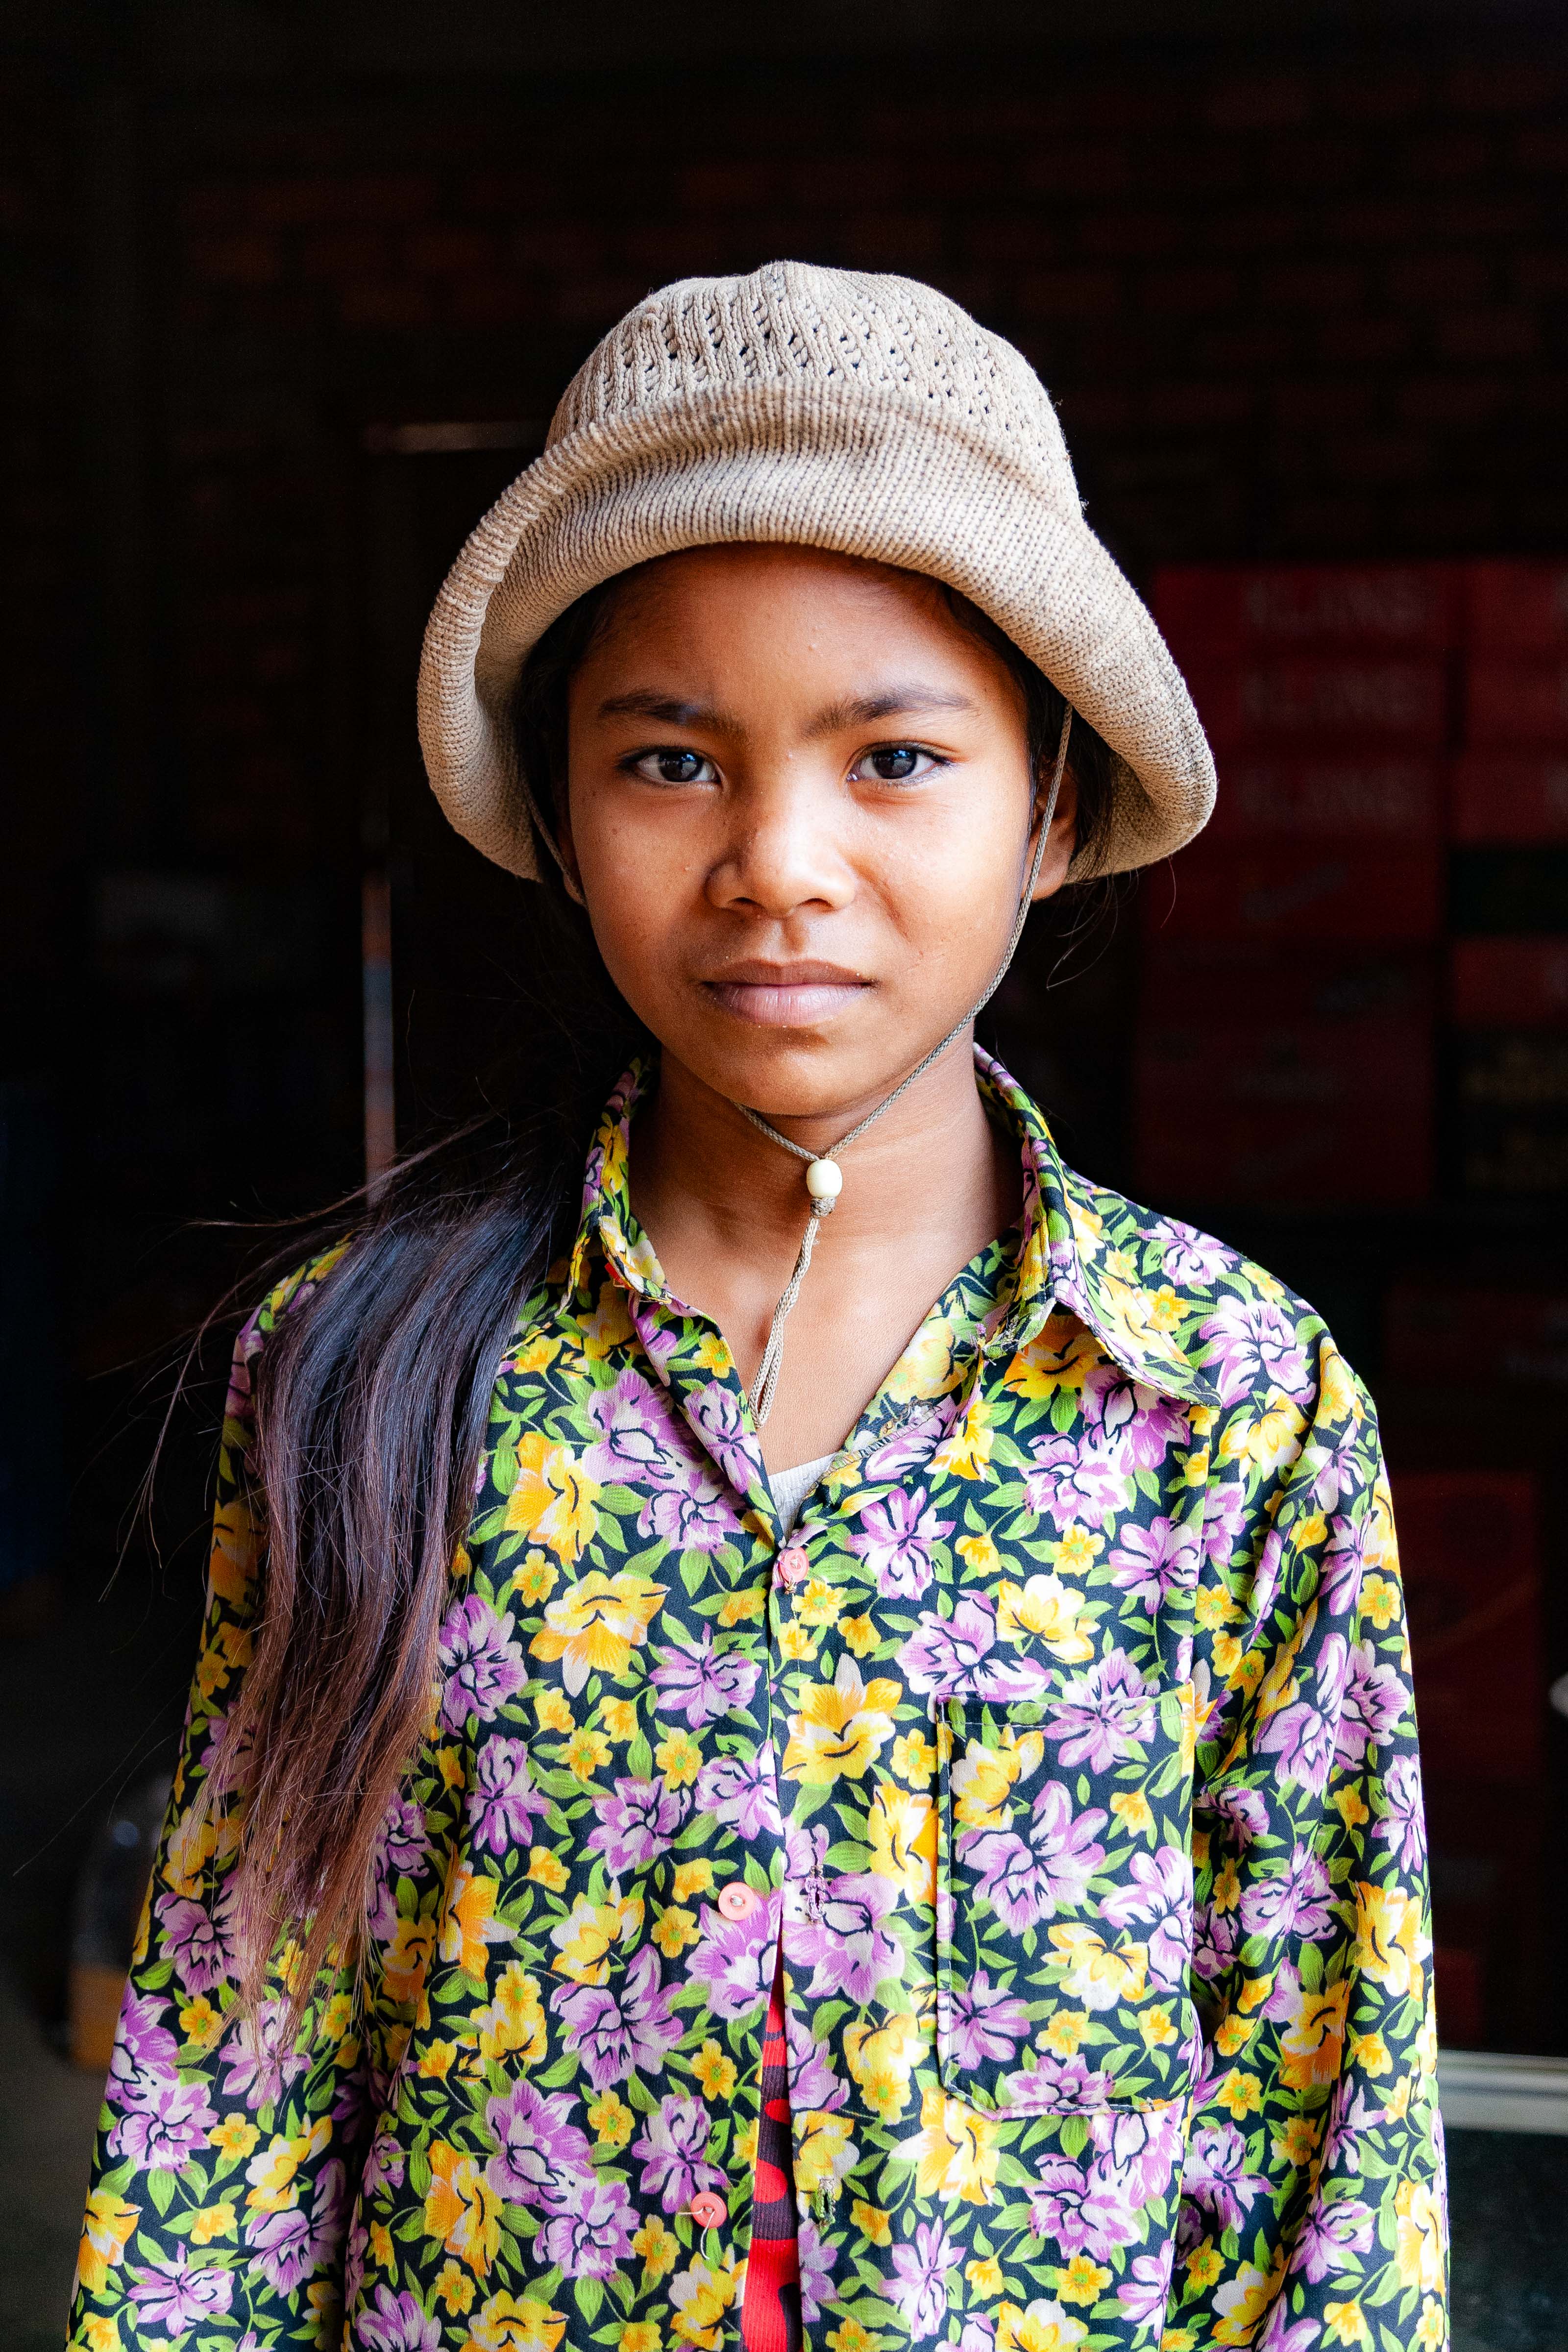 Cambodia, Kampong Thum Prov, Country Girl, 2010, IMG 5538